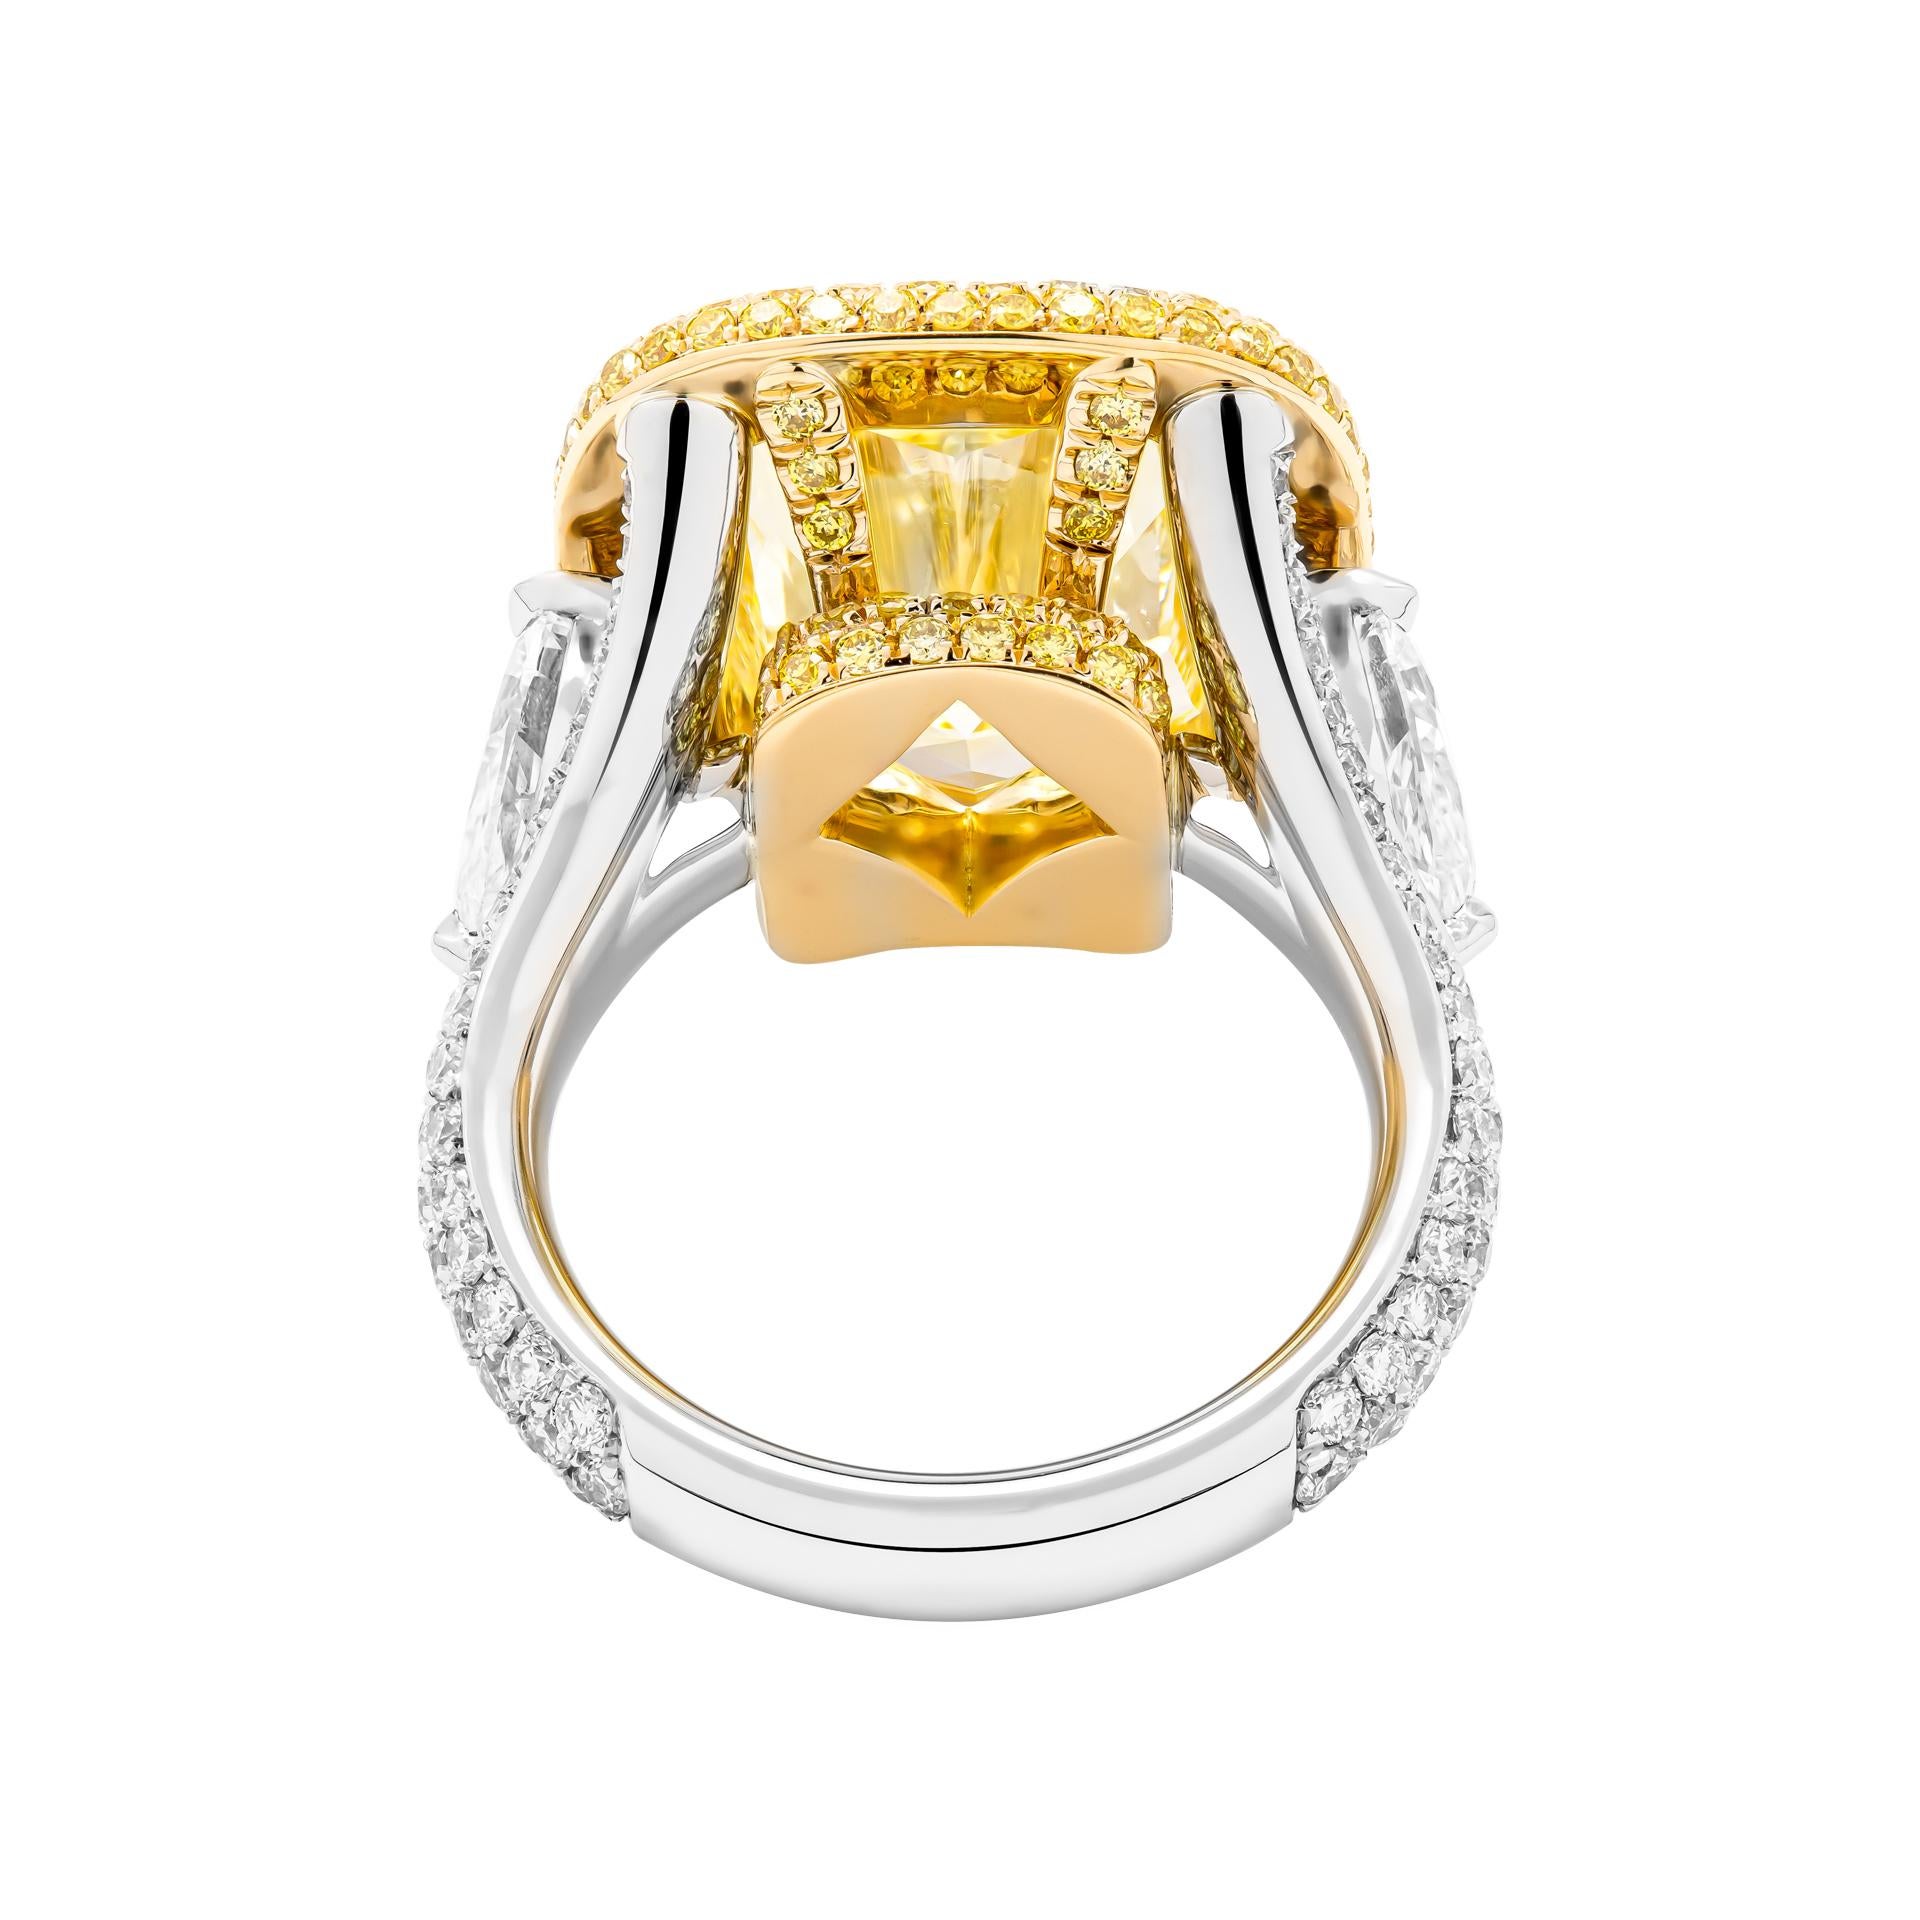 3 stone ring in 18K Yellow Gold & Platinum 
Center stone: 10.11ct Fancy Yellow VS2 Cushion Shape Diamond GIA#2215485866
 Side stones: 0.70ct F VVS2 Pear Shape Diamond GIA#3425192725 
                      0.70ct F VS1 Pear Shape Diamond